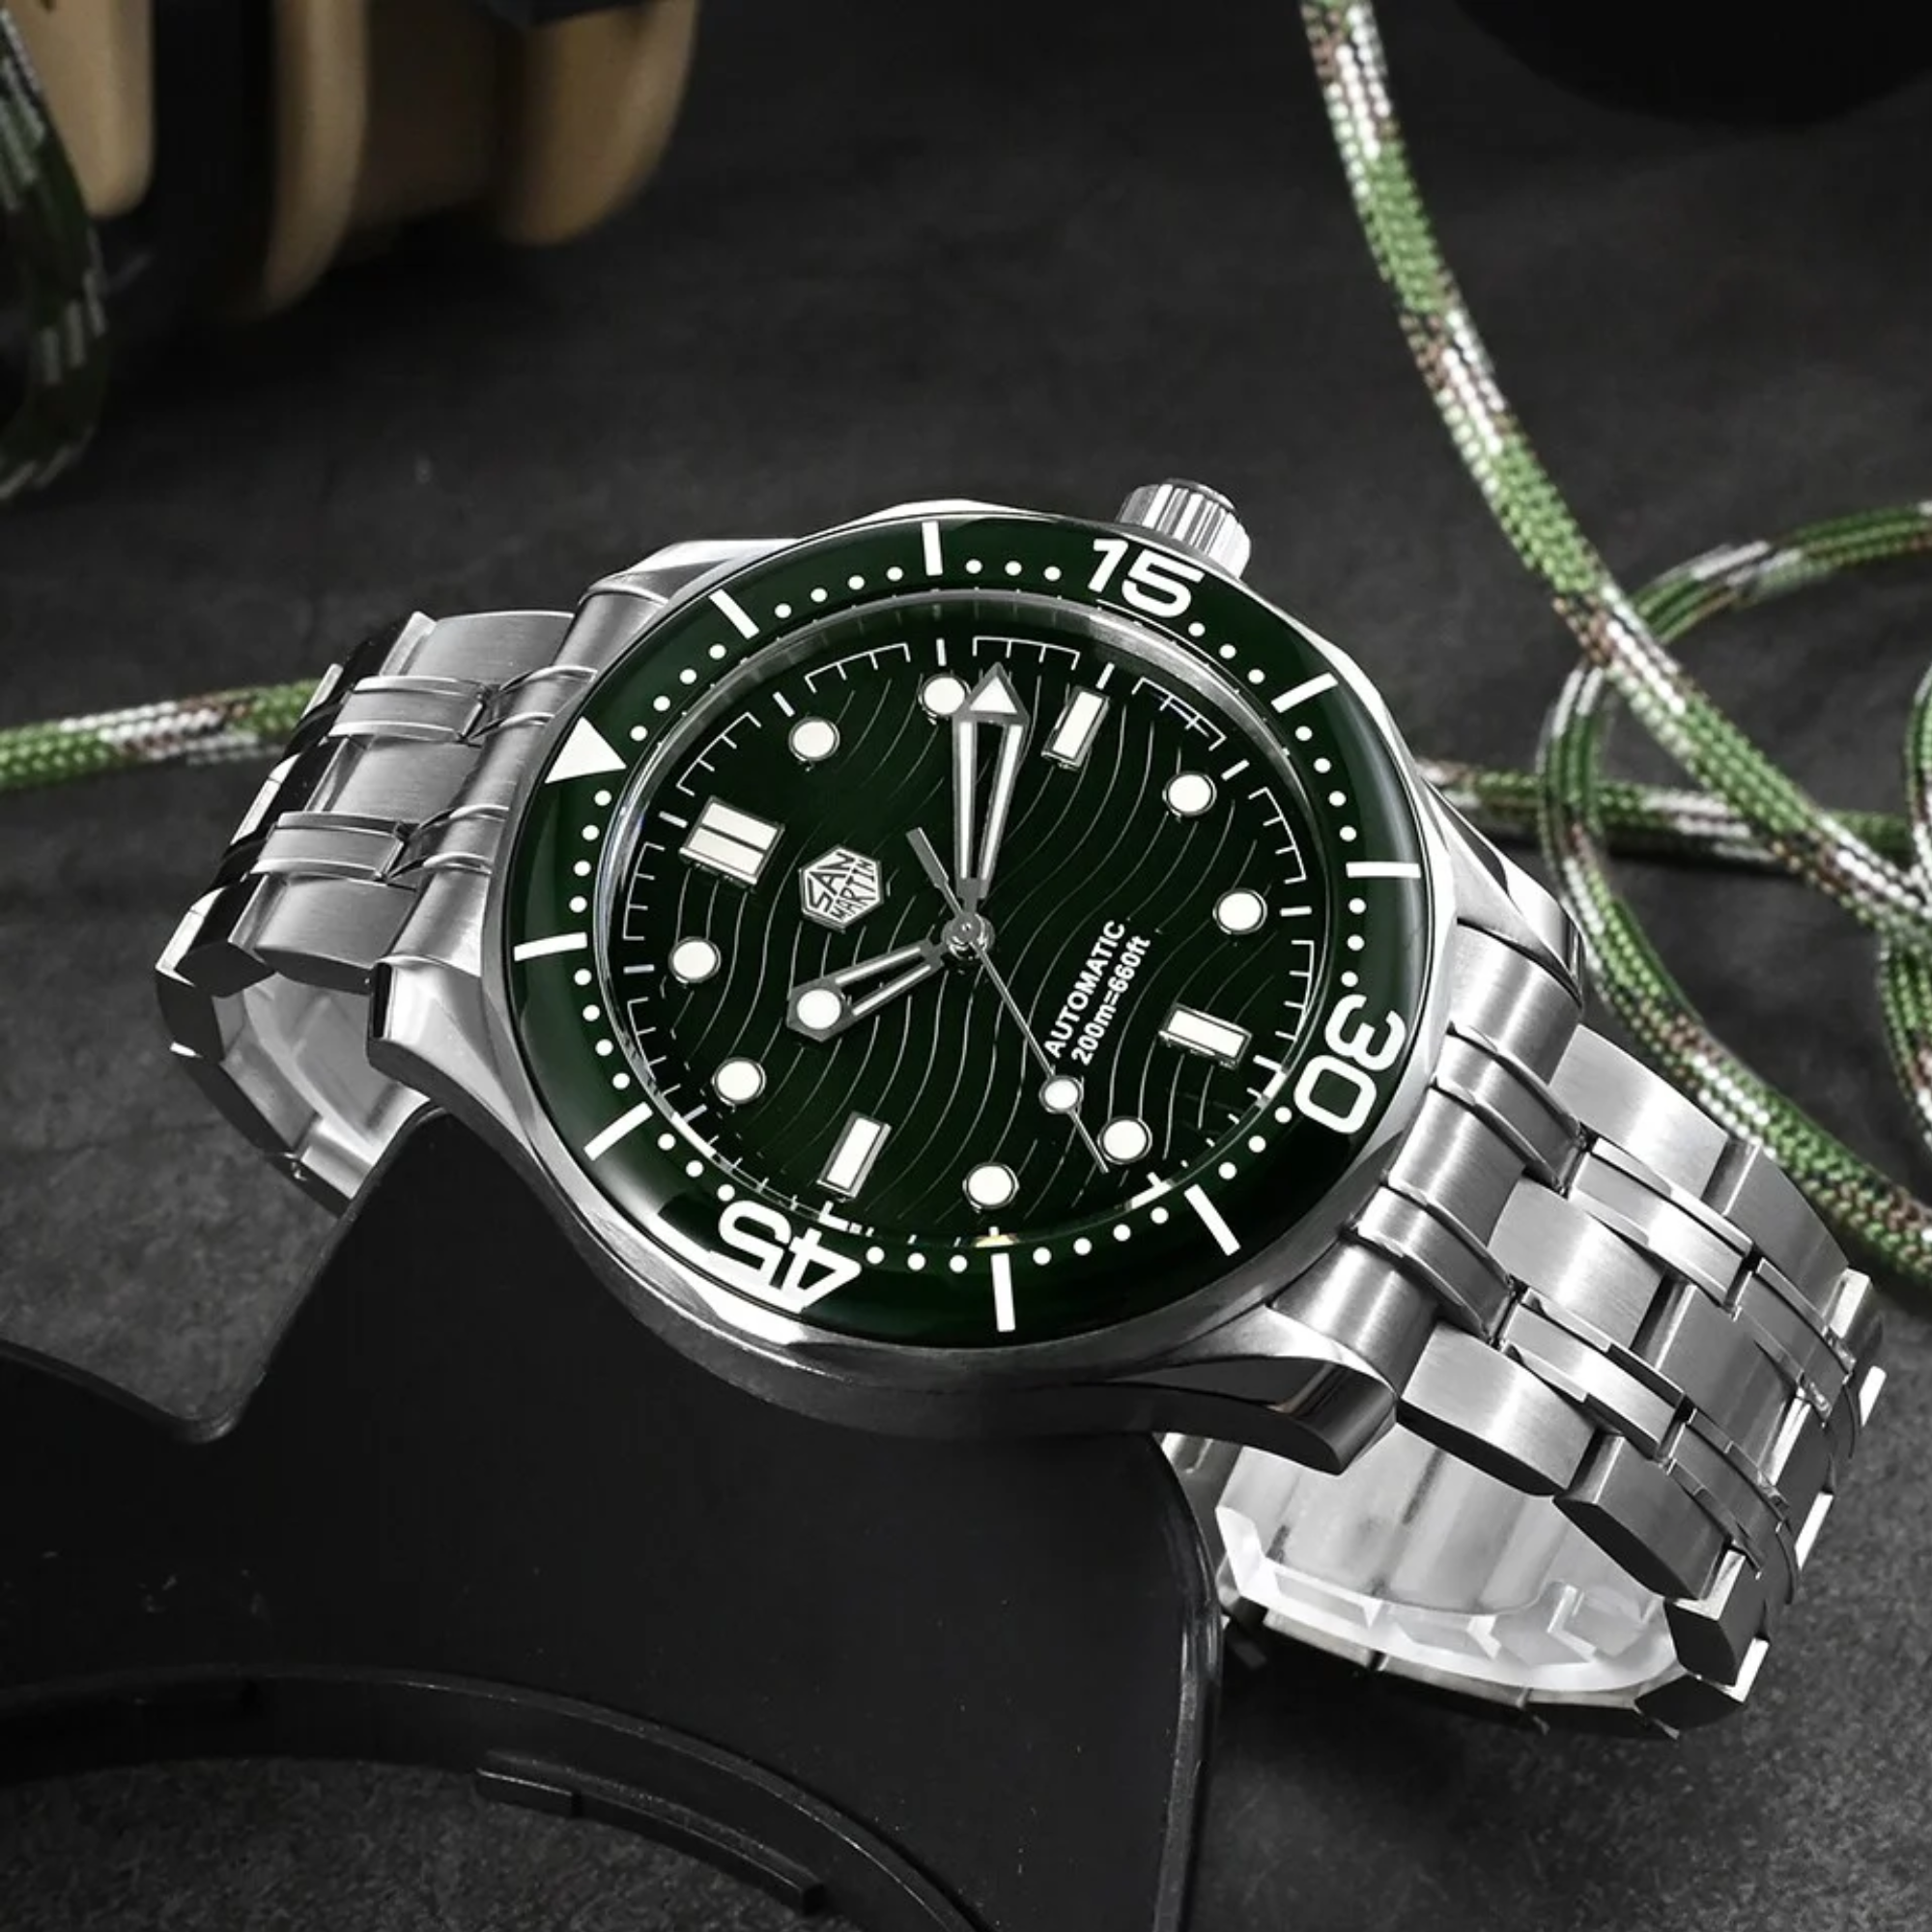 San Martin Sea Ghost Diving Watch SN0088G2 - Green san martin watches india online